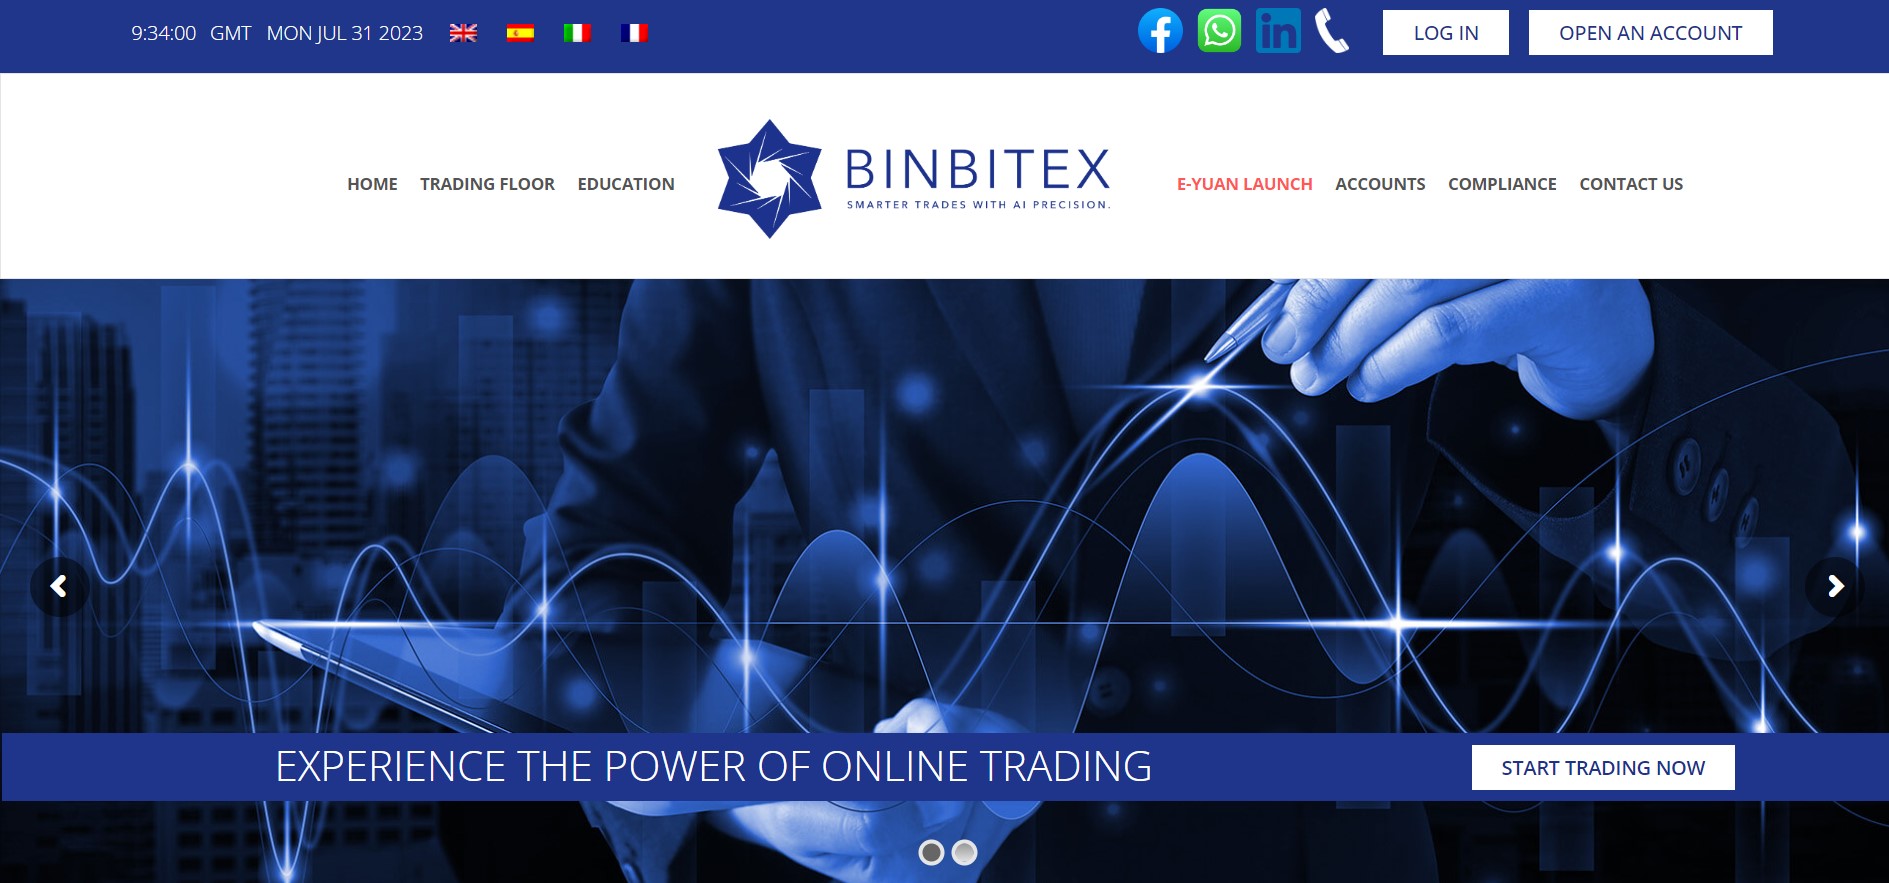 BinBitex website